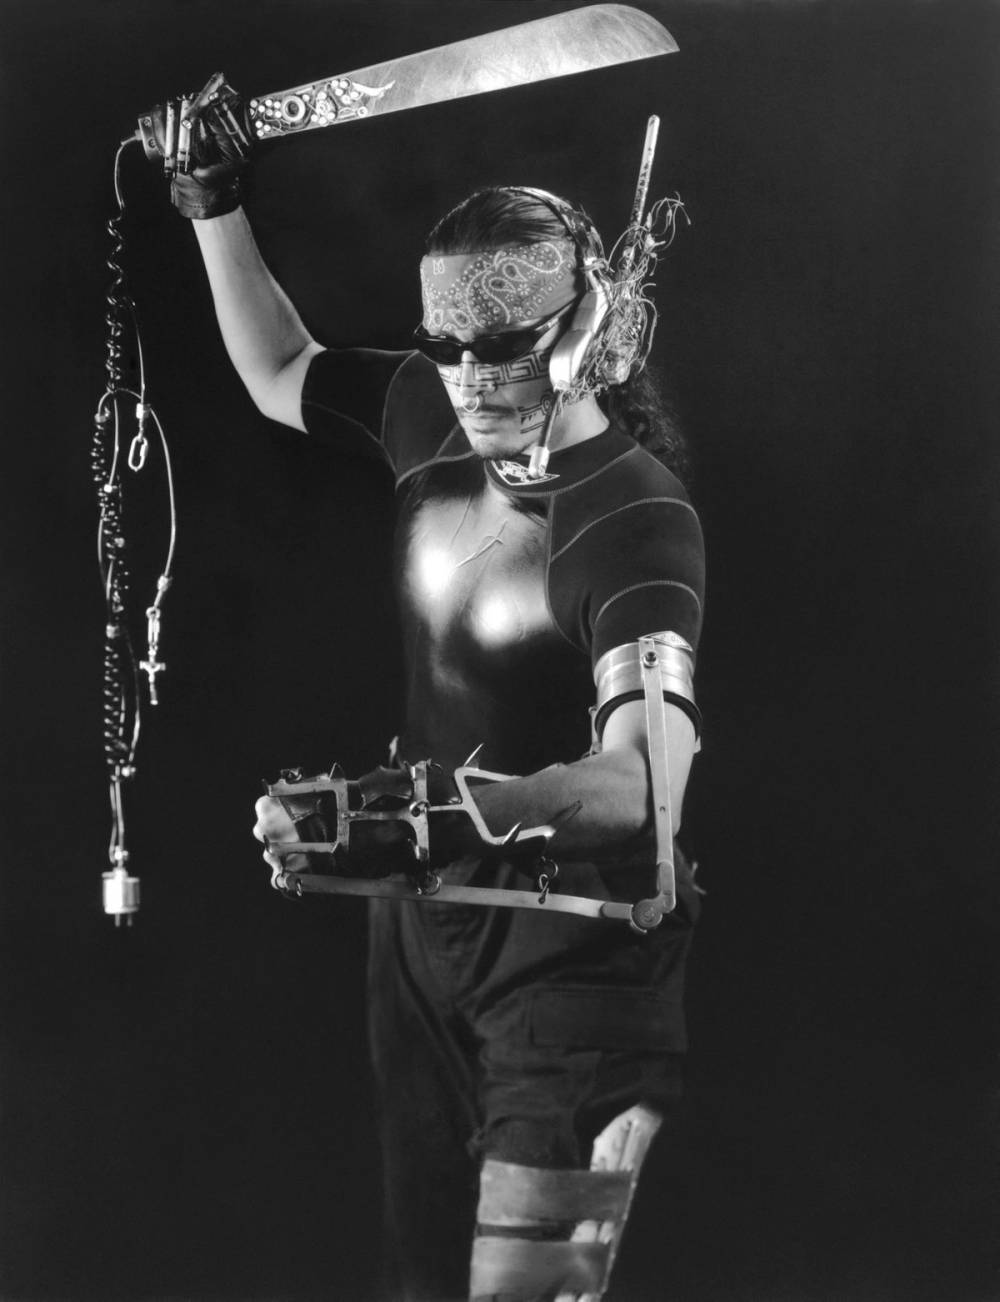 Roberto Sifuentes in latino cyborg garb. Machete in right hand, sunglasses, metallic prosthesis surrounding his left arm.